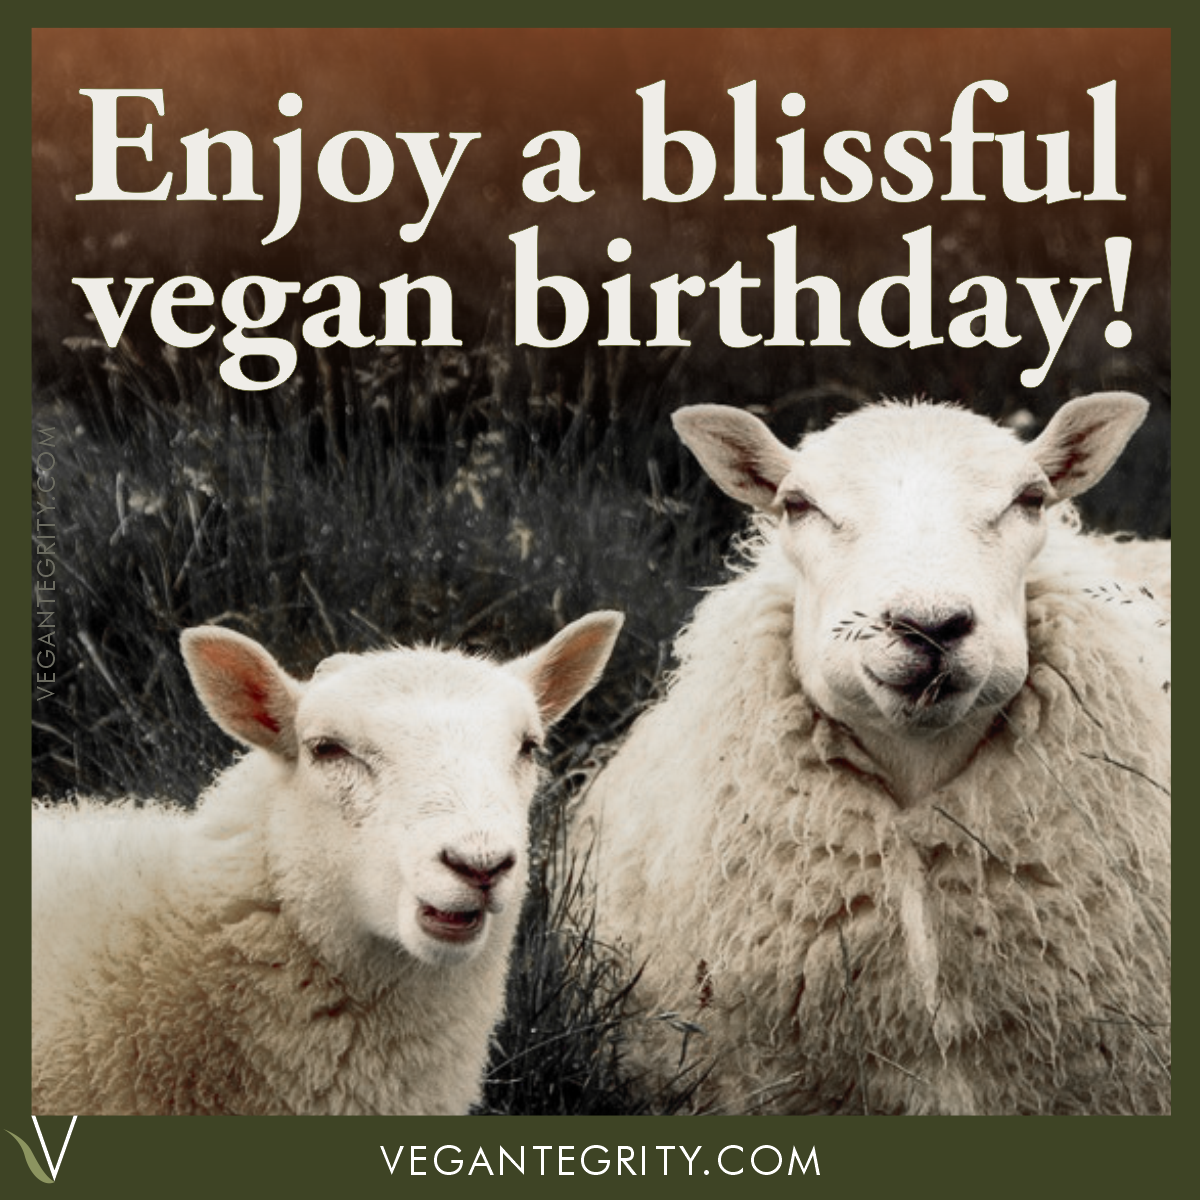 Two happy white sheep - Enjoy a blissful vegan birthday.